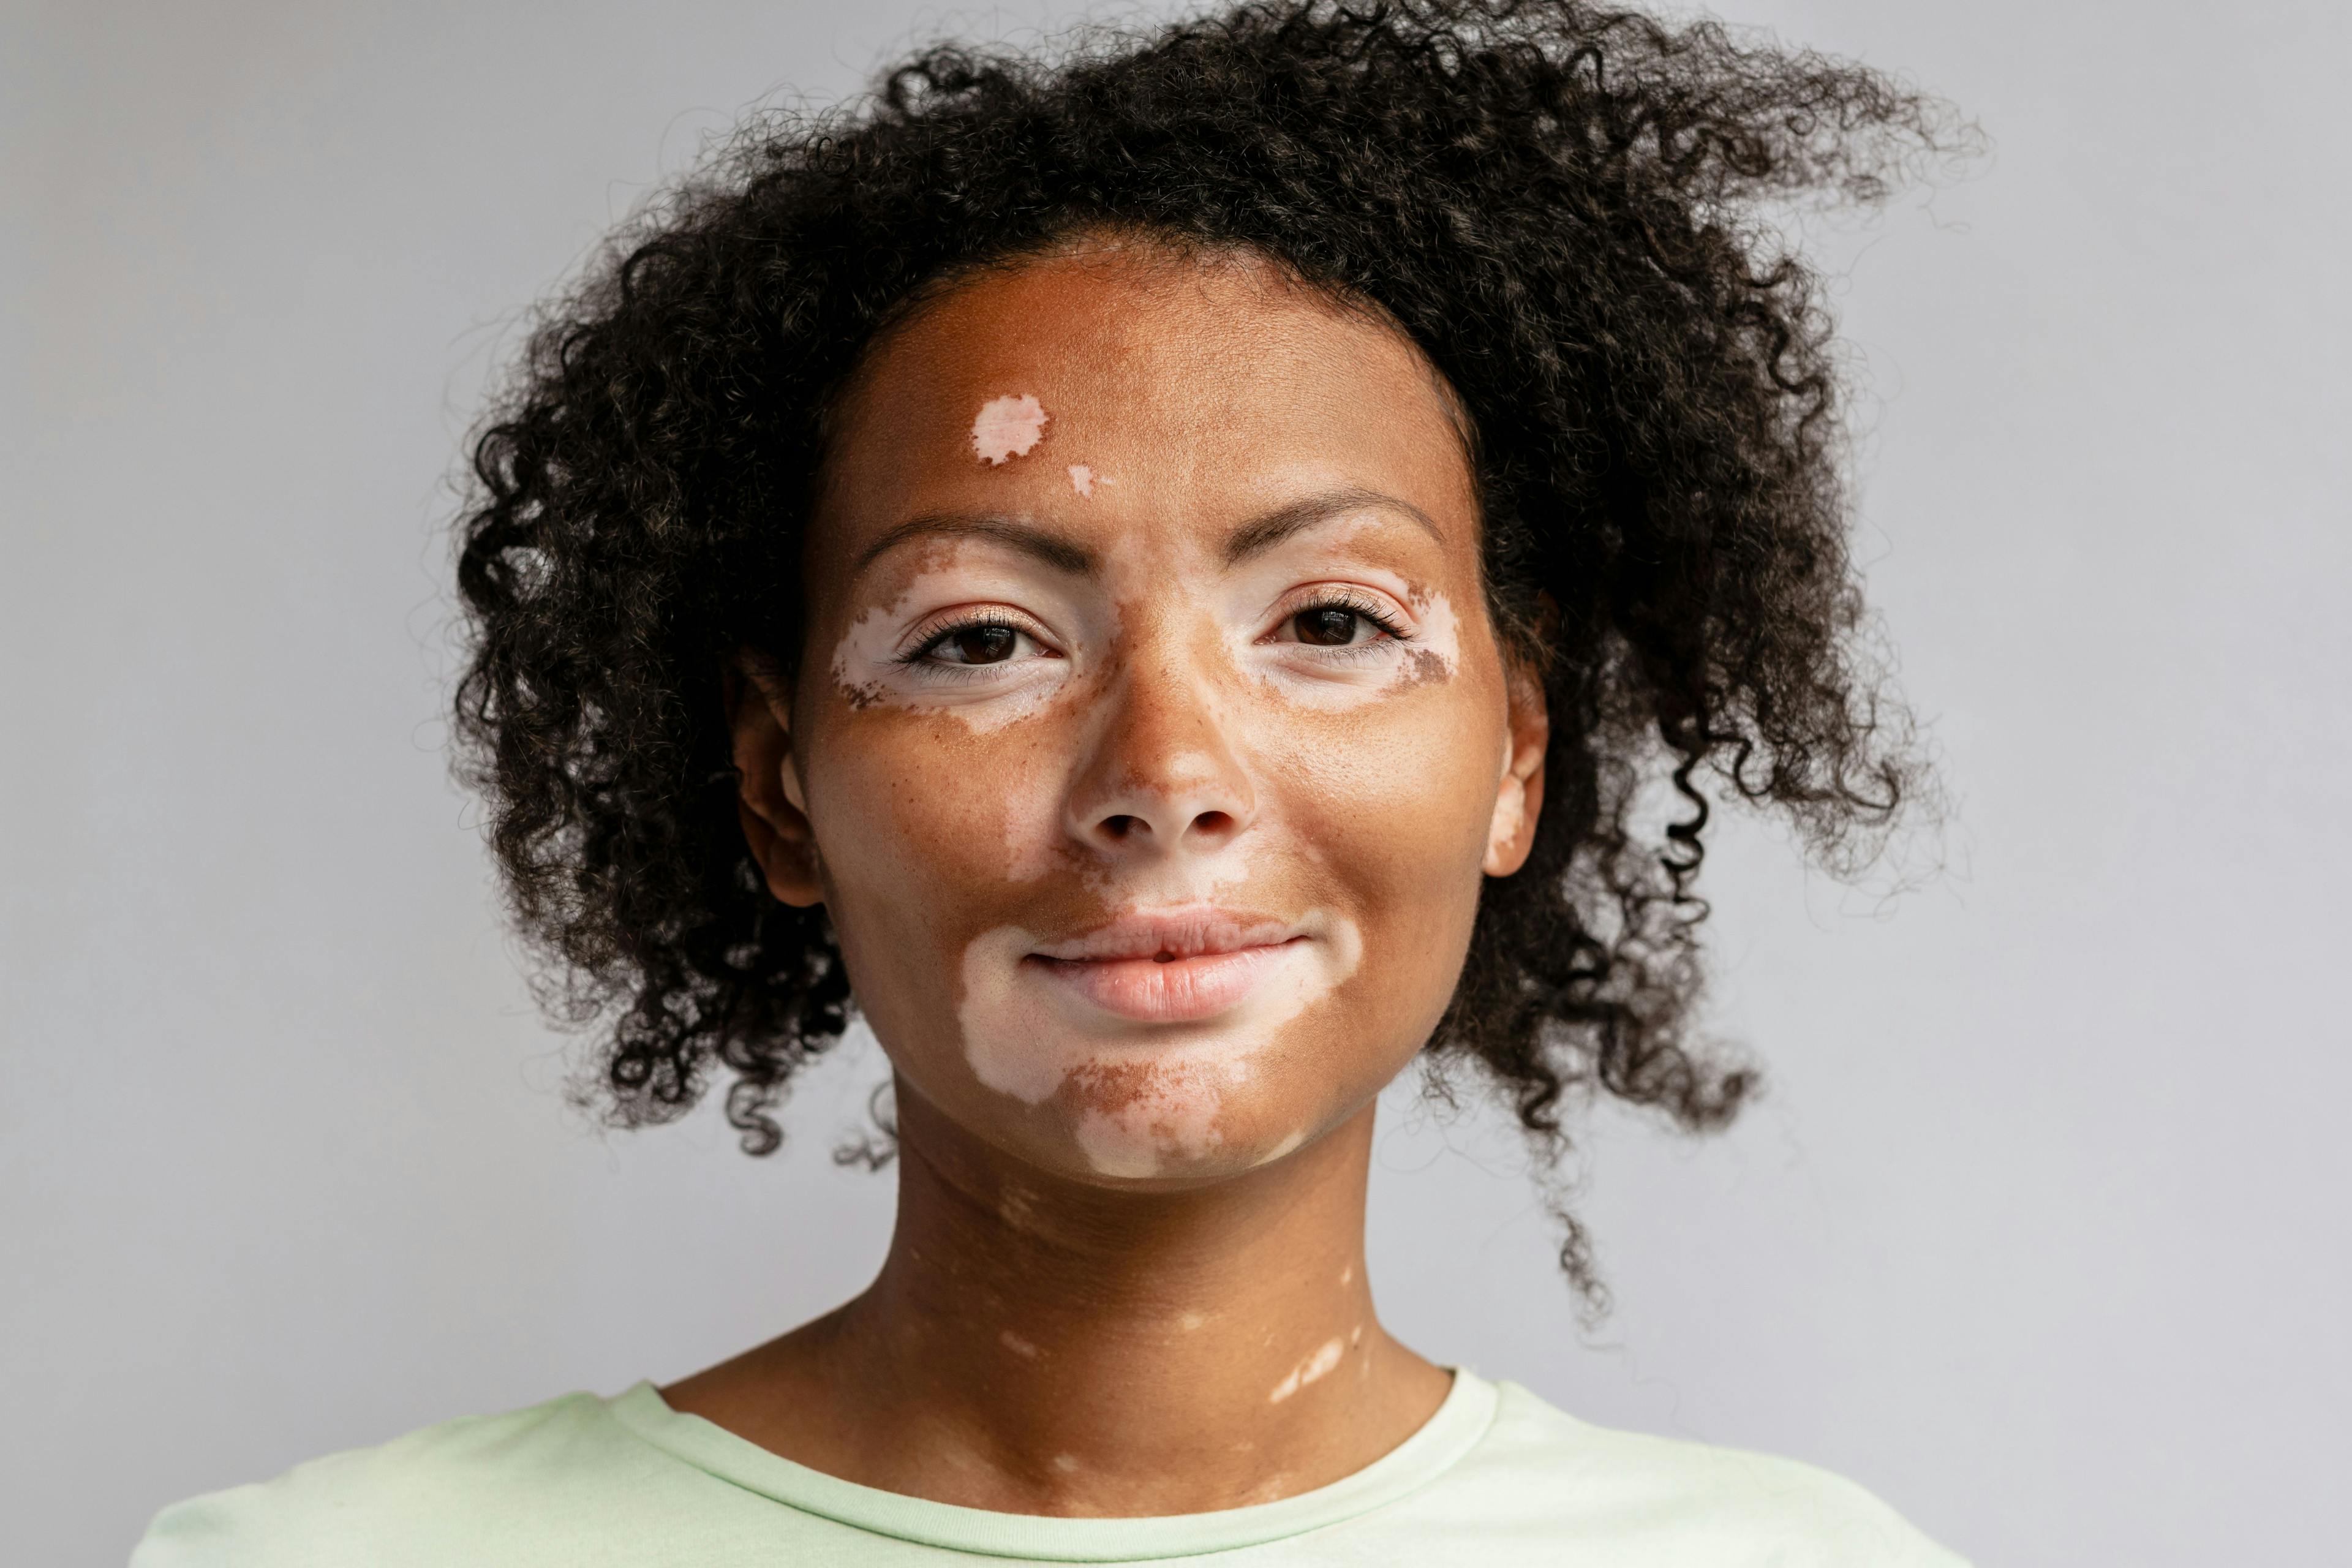 Ruxolitinib, Povorcitinib Effective in Treating Vitiligo, According to Posters